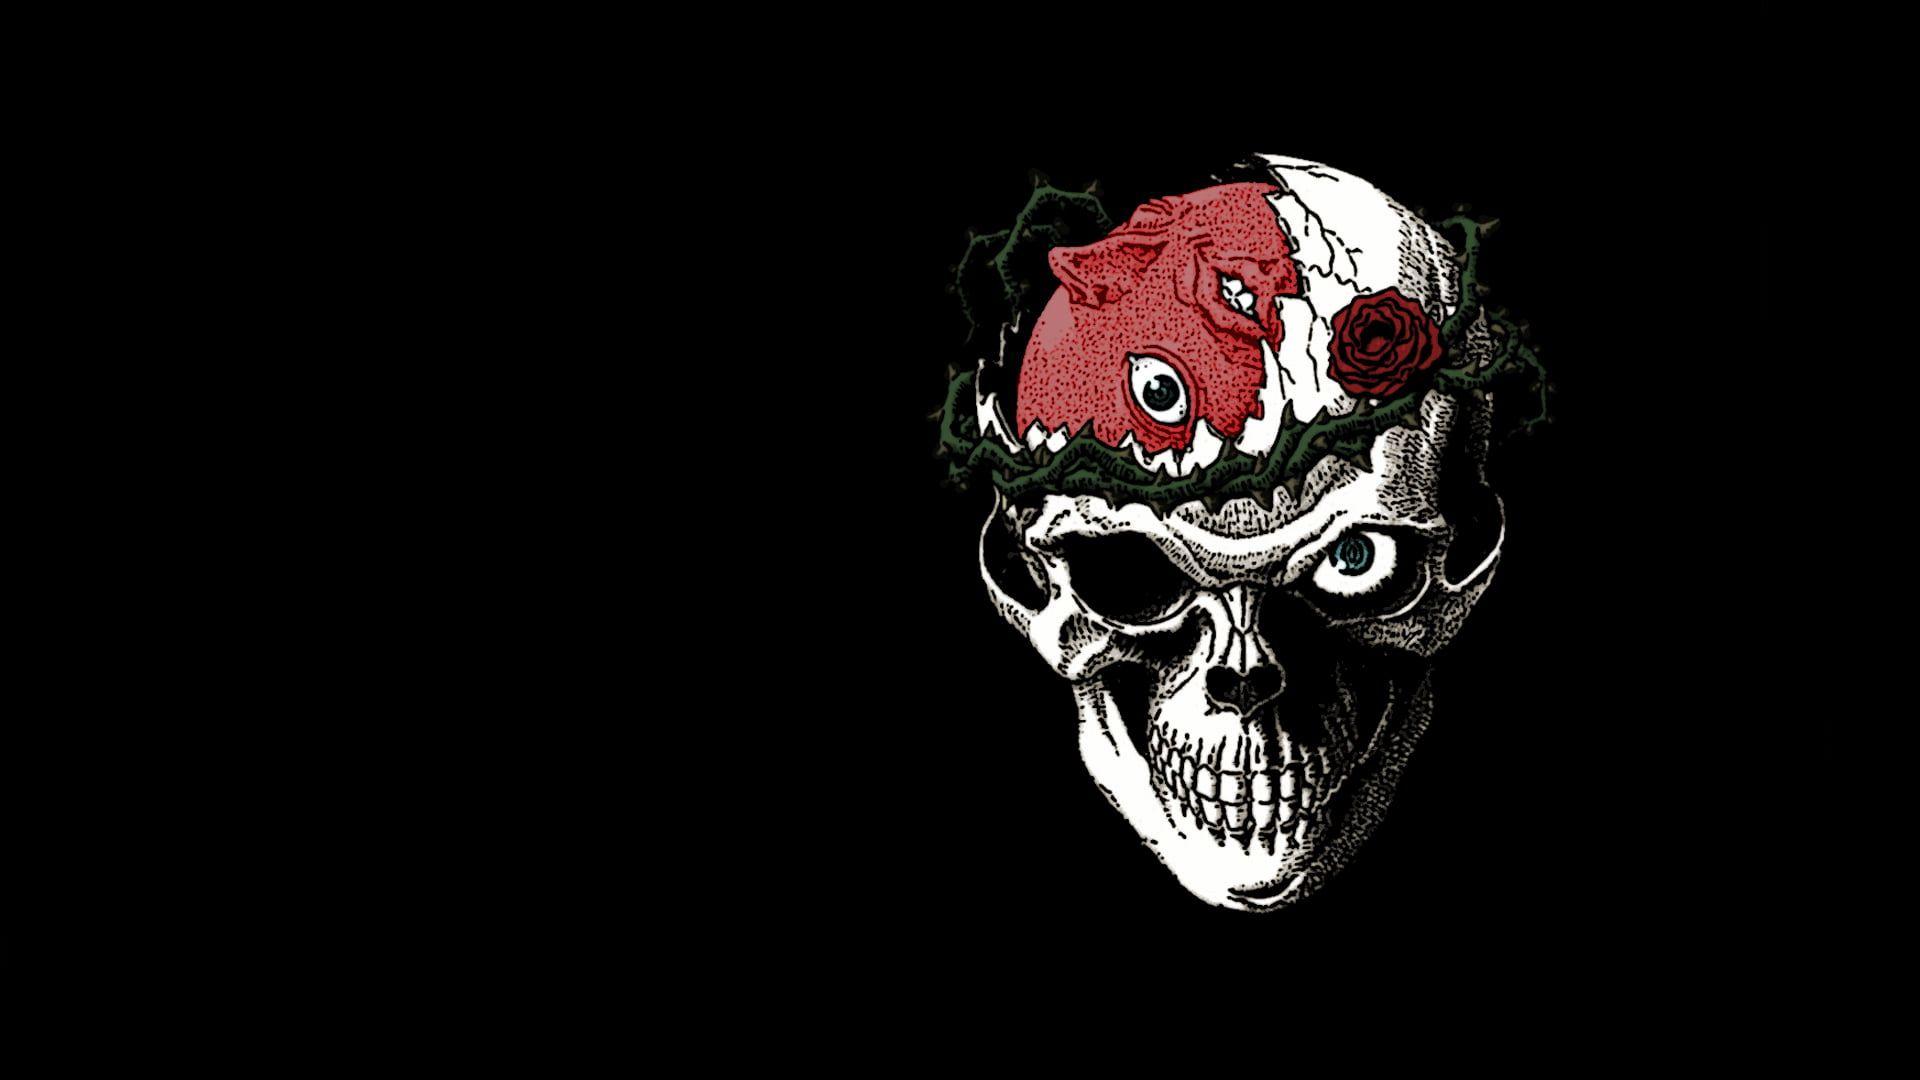 Berserk Skeletons wallpaper by FxFernan - Download on ZEDGE™ | b77b